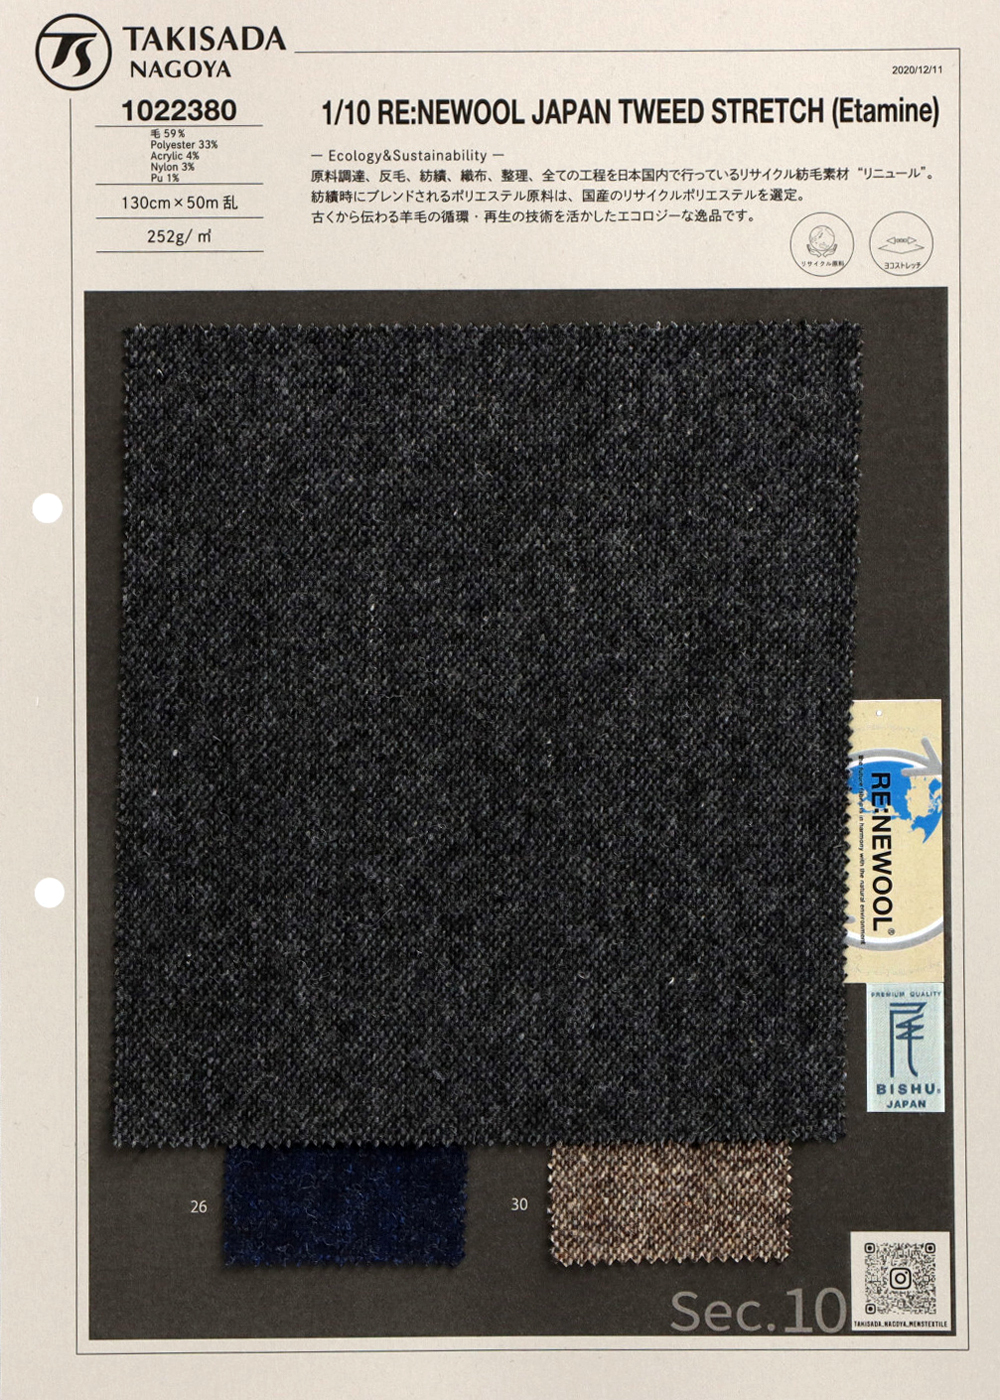 1022380 1/10 RE:NEWOOL® Stretch Home Spun[Fabrica Textil] Takisada Nagoya